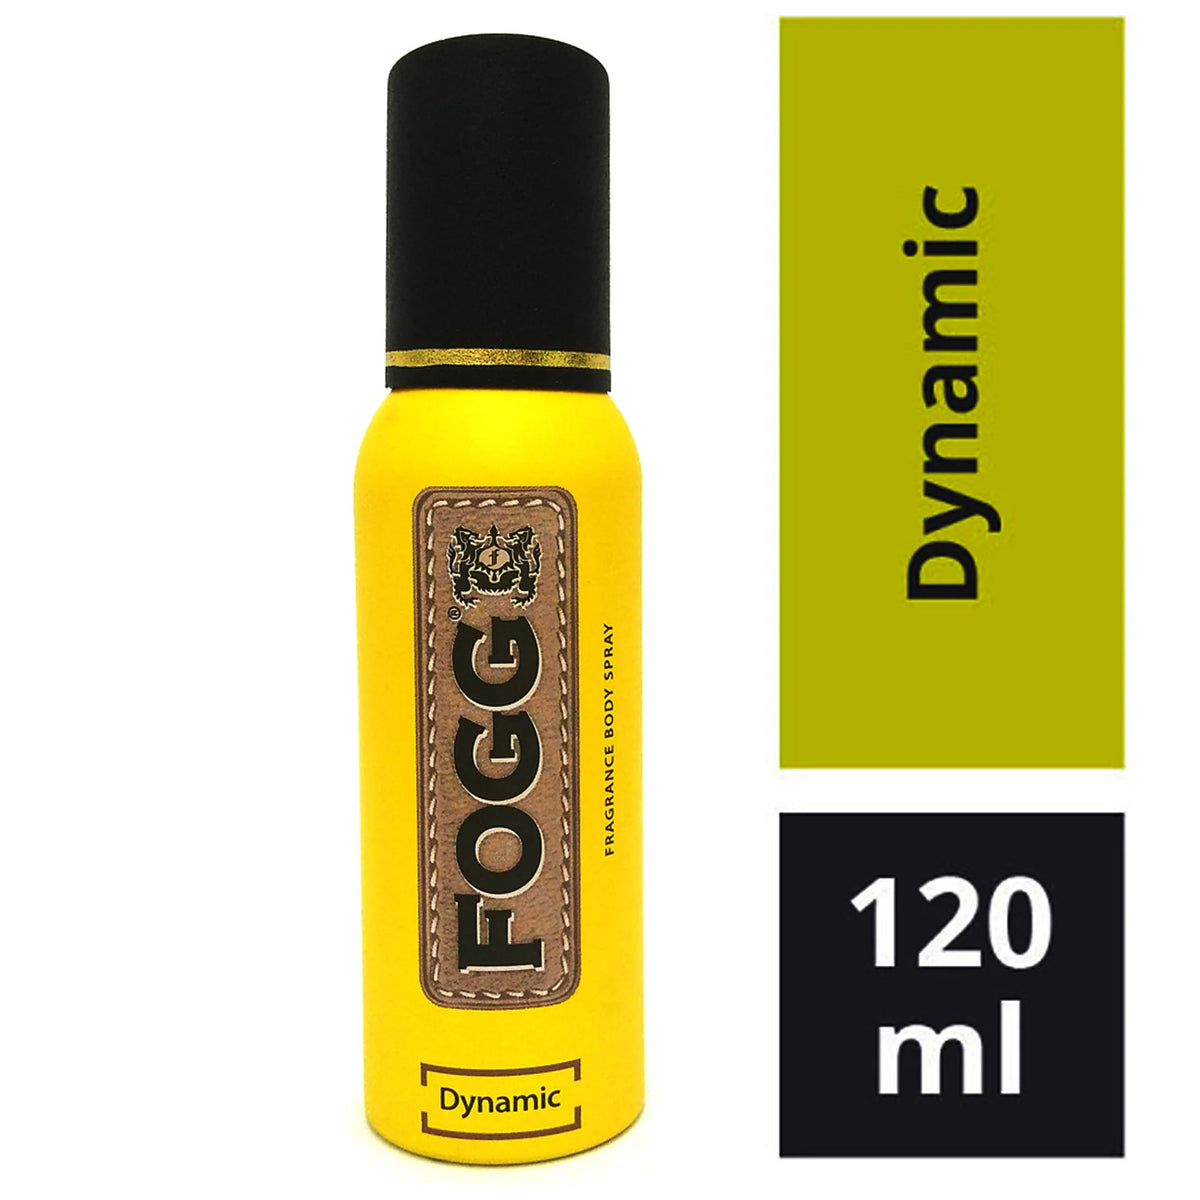 Fogg Dynamic for Men - Perfume Spray - 120ml